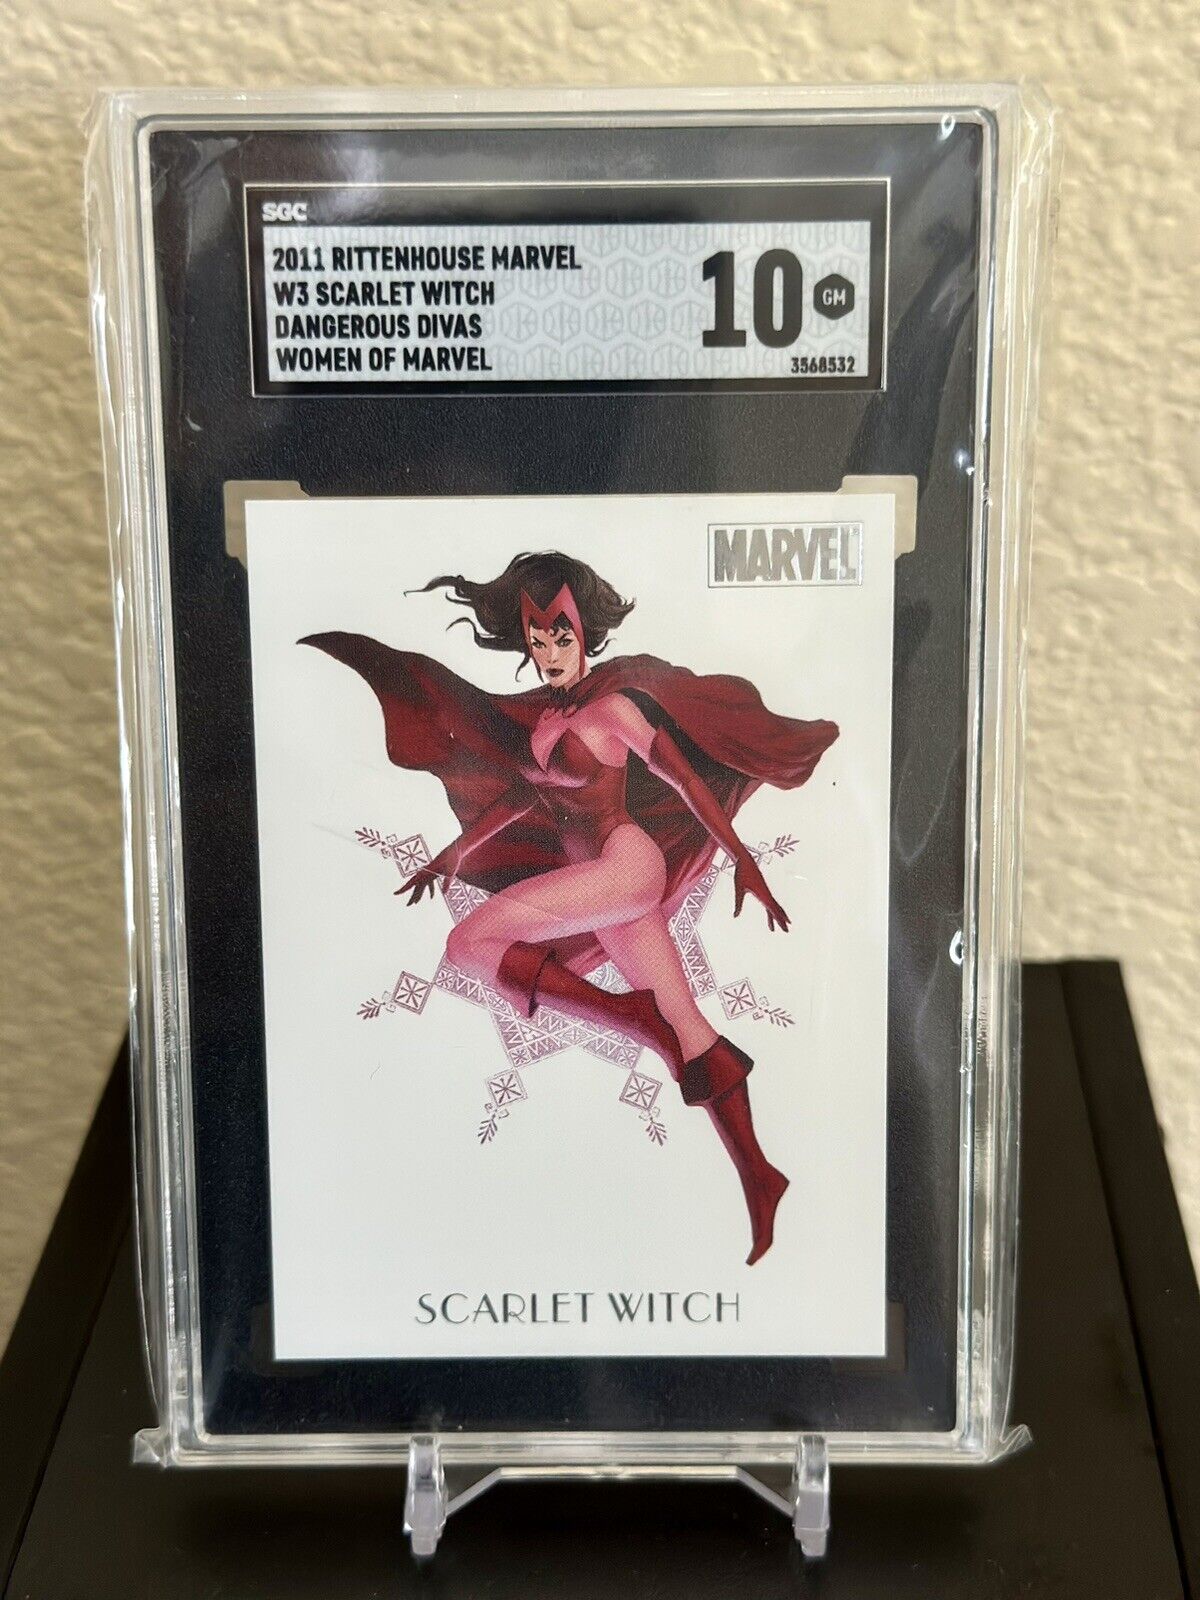 2011 Marvel Dangerous Divas Women of Marvel Scarlet Witch #W3 SGC 10 GEM MT MCU